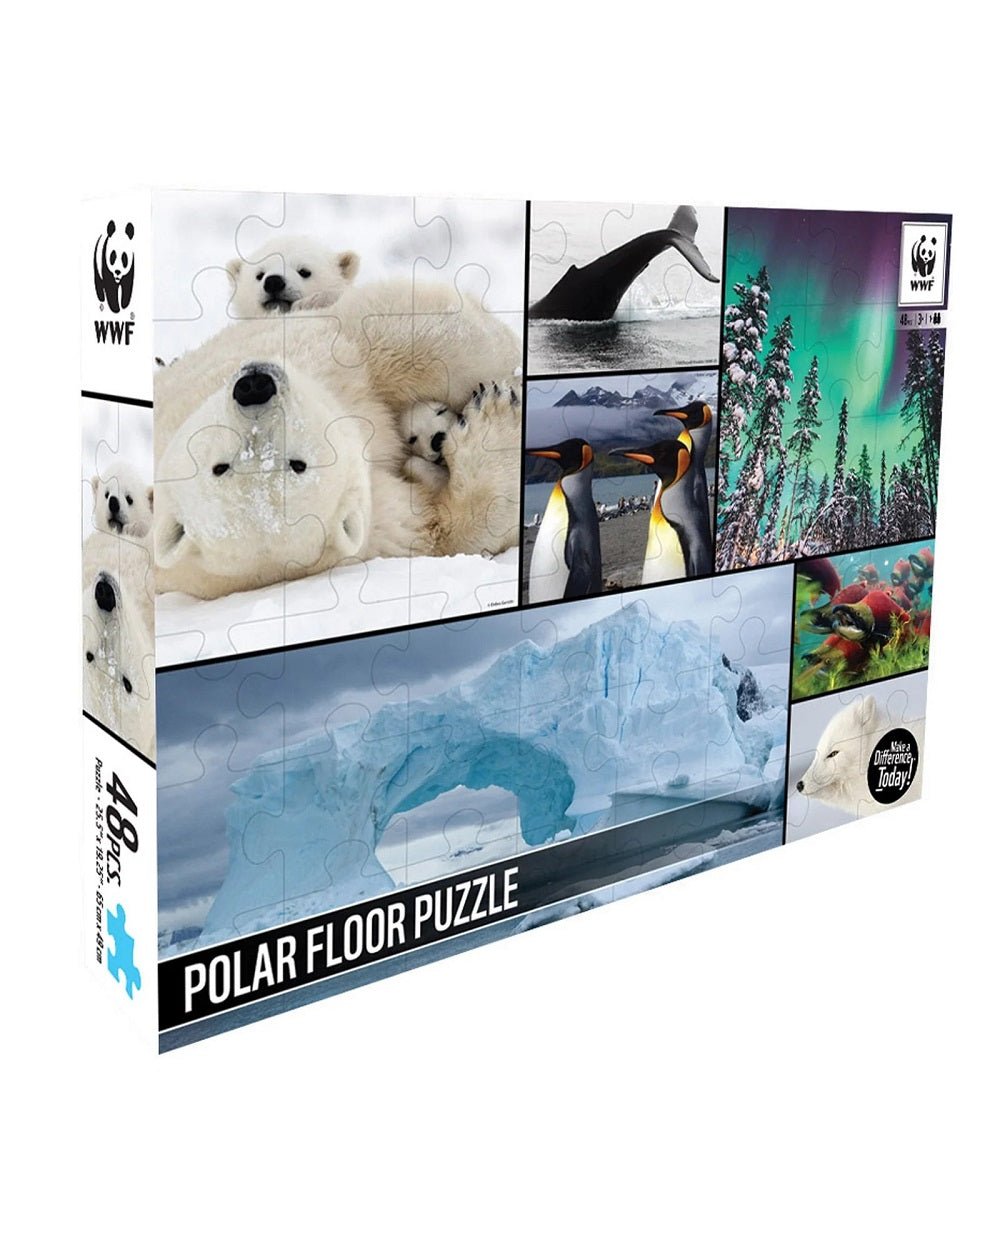 WWF 48 Piece Floor Puzzle - Polar